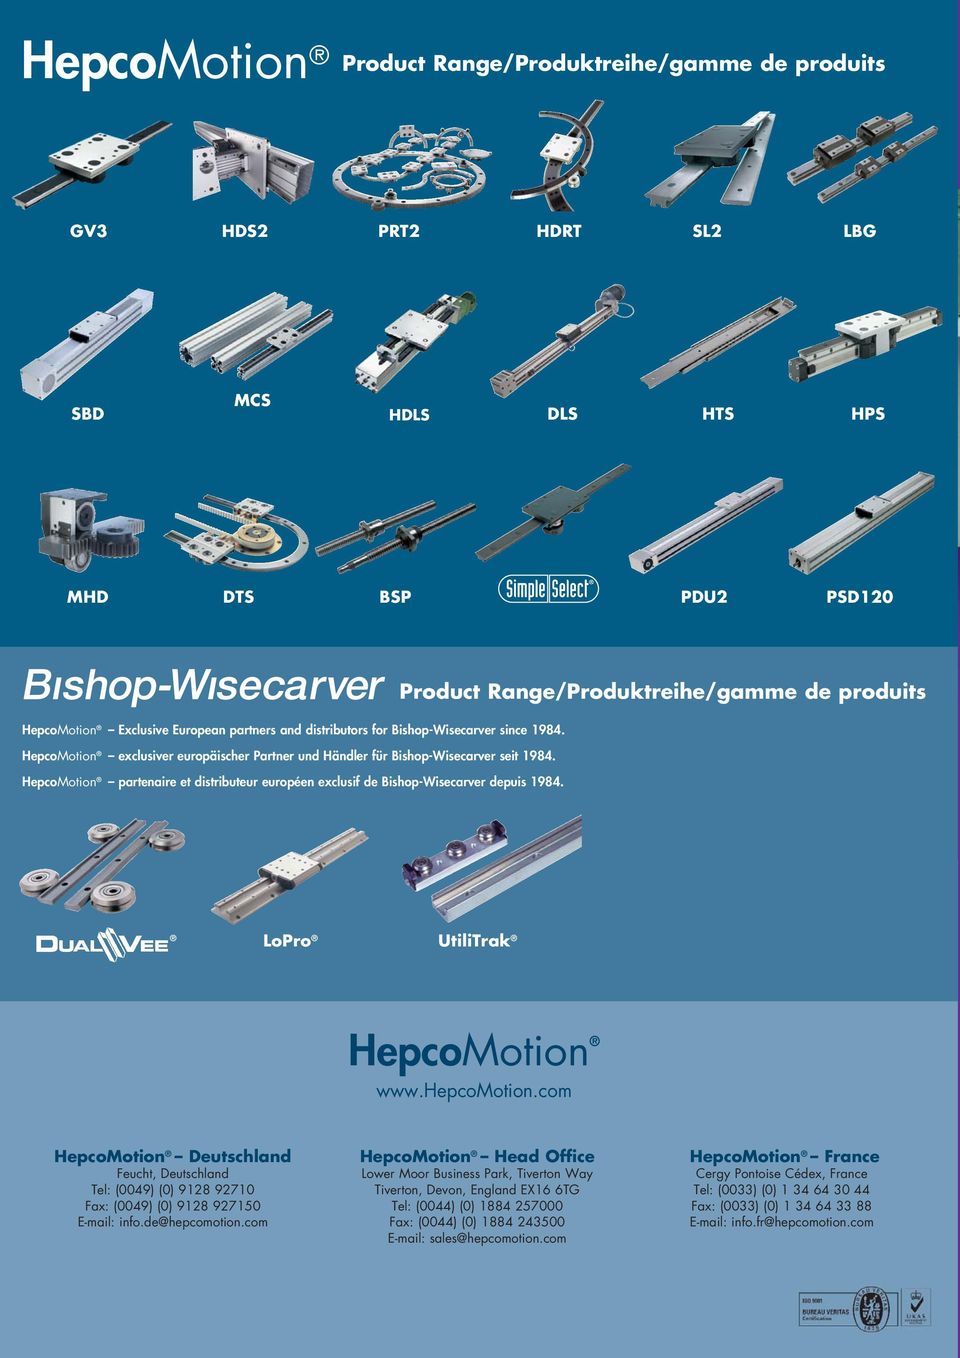 HepcoMotion partenaire et distributeur européen exclusif de Bishop-Wisecarver depuis 1984. LoPro UtiliTrak HepcoMotion www.hepcomotion.